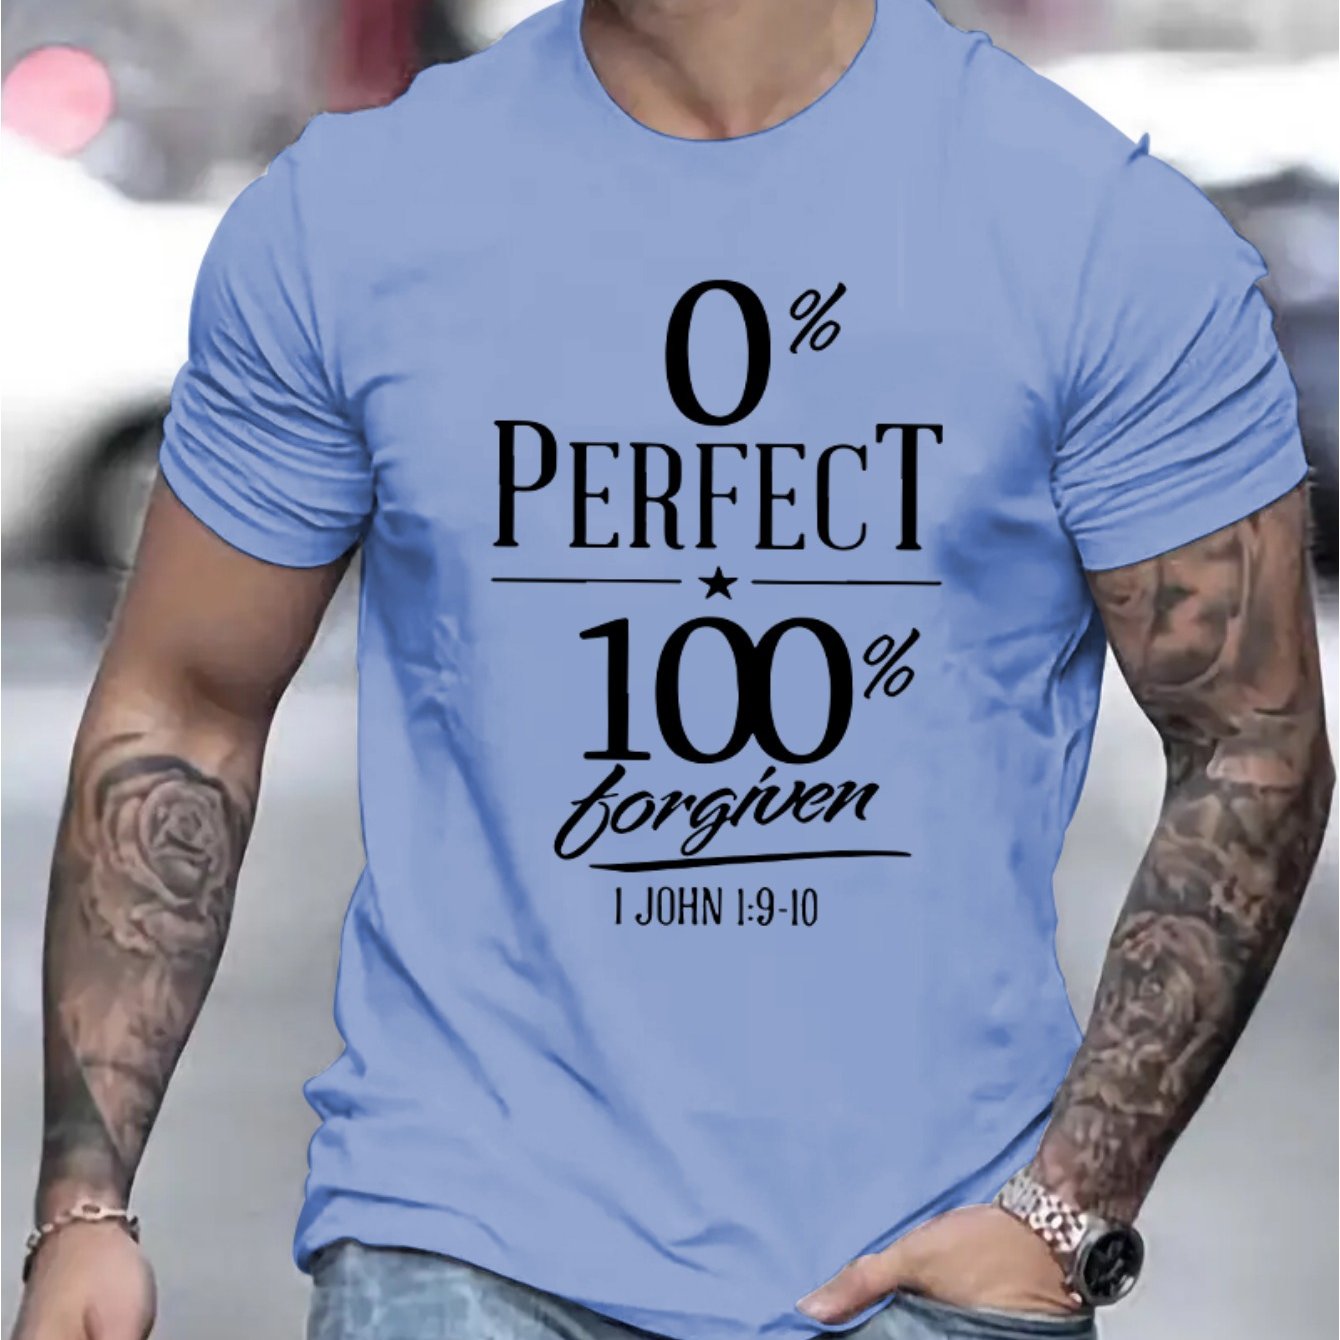 0% Perfect 100% Forgiven Men's Christian T-shirt claimedbygoddesigns